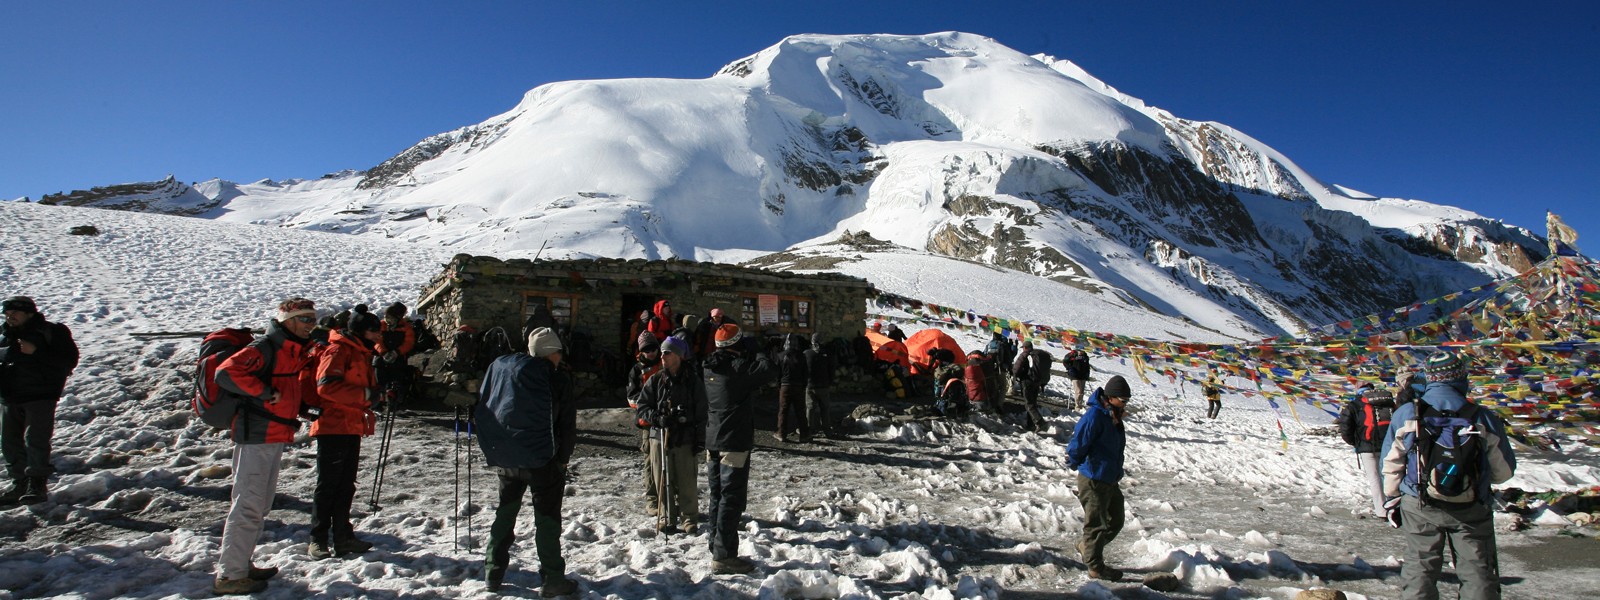 Annapurna Circuit and Annapurna Base Camp 